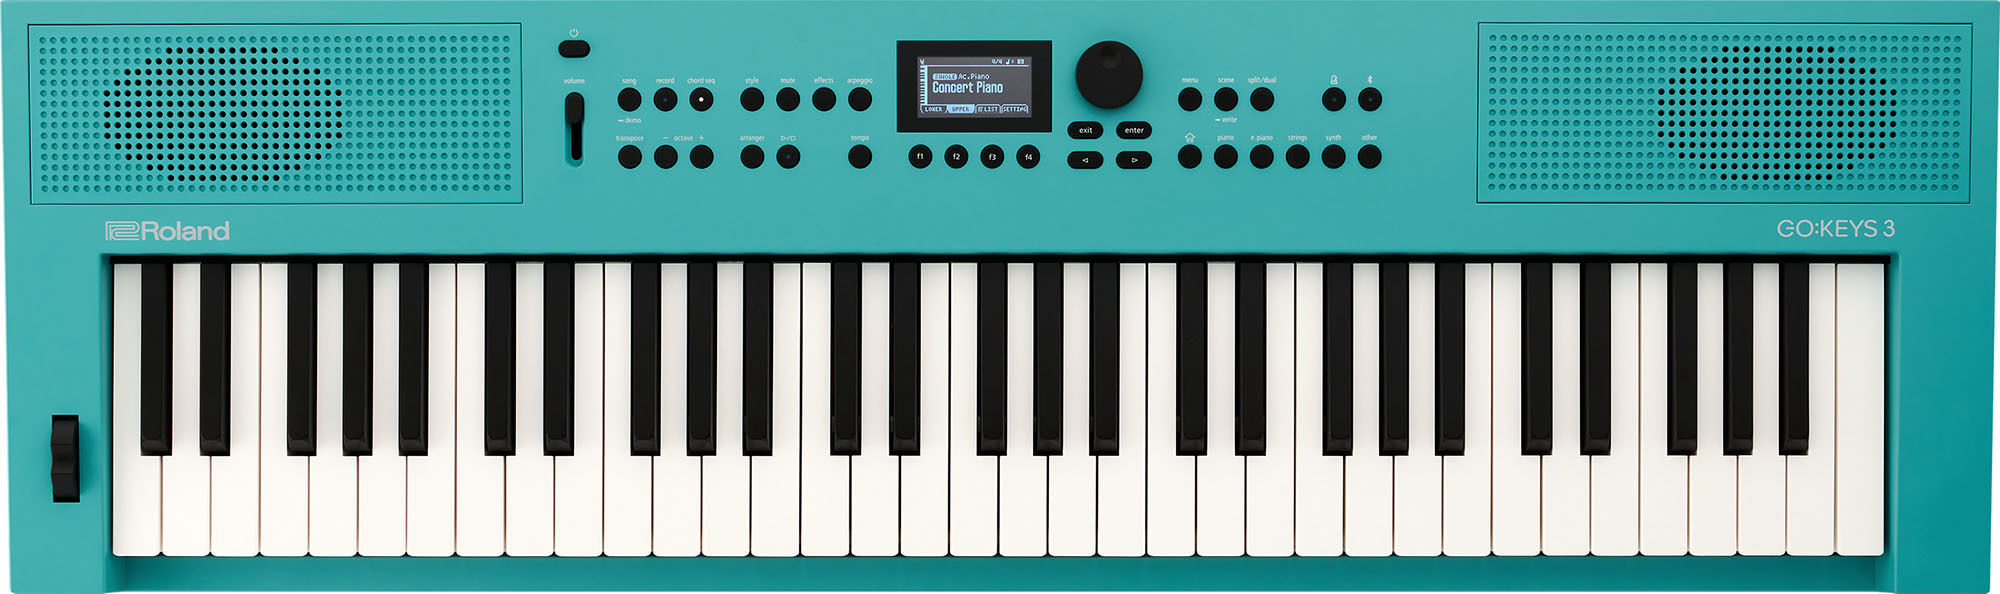 Roland Go:keys-3-tq - Entertainer Keyboard - Main picture